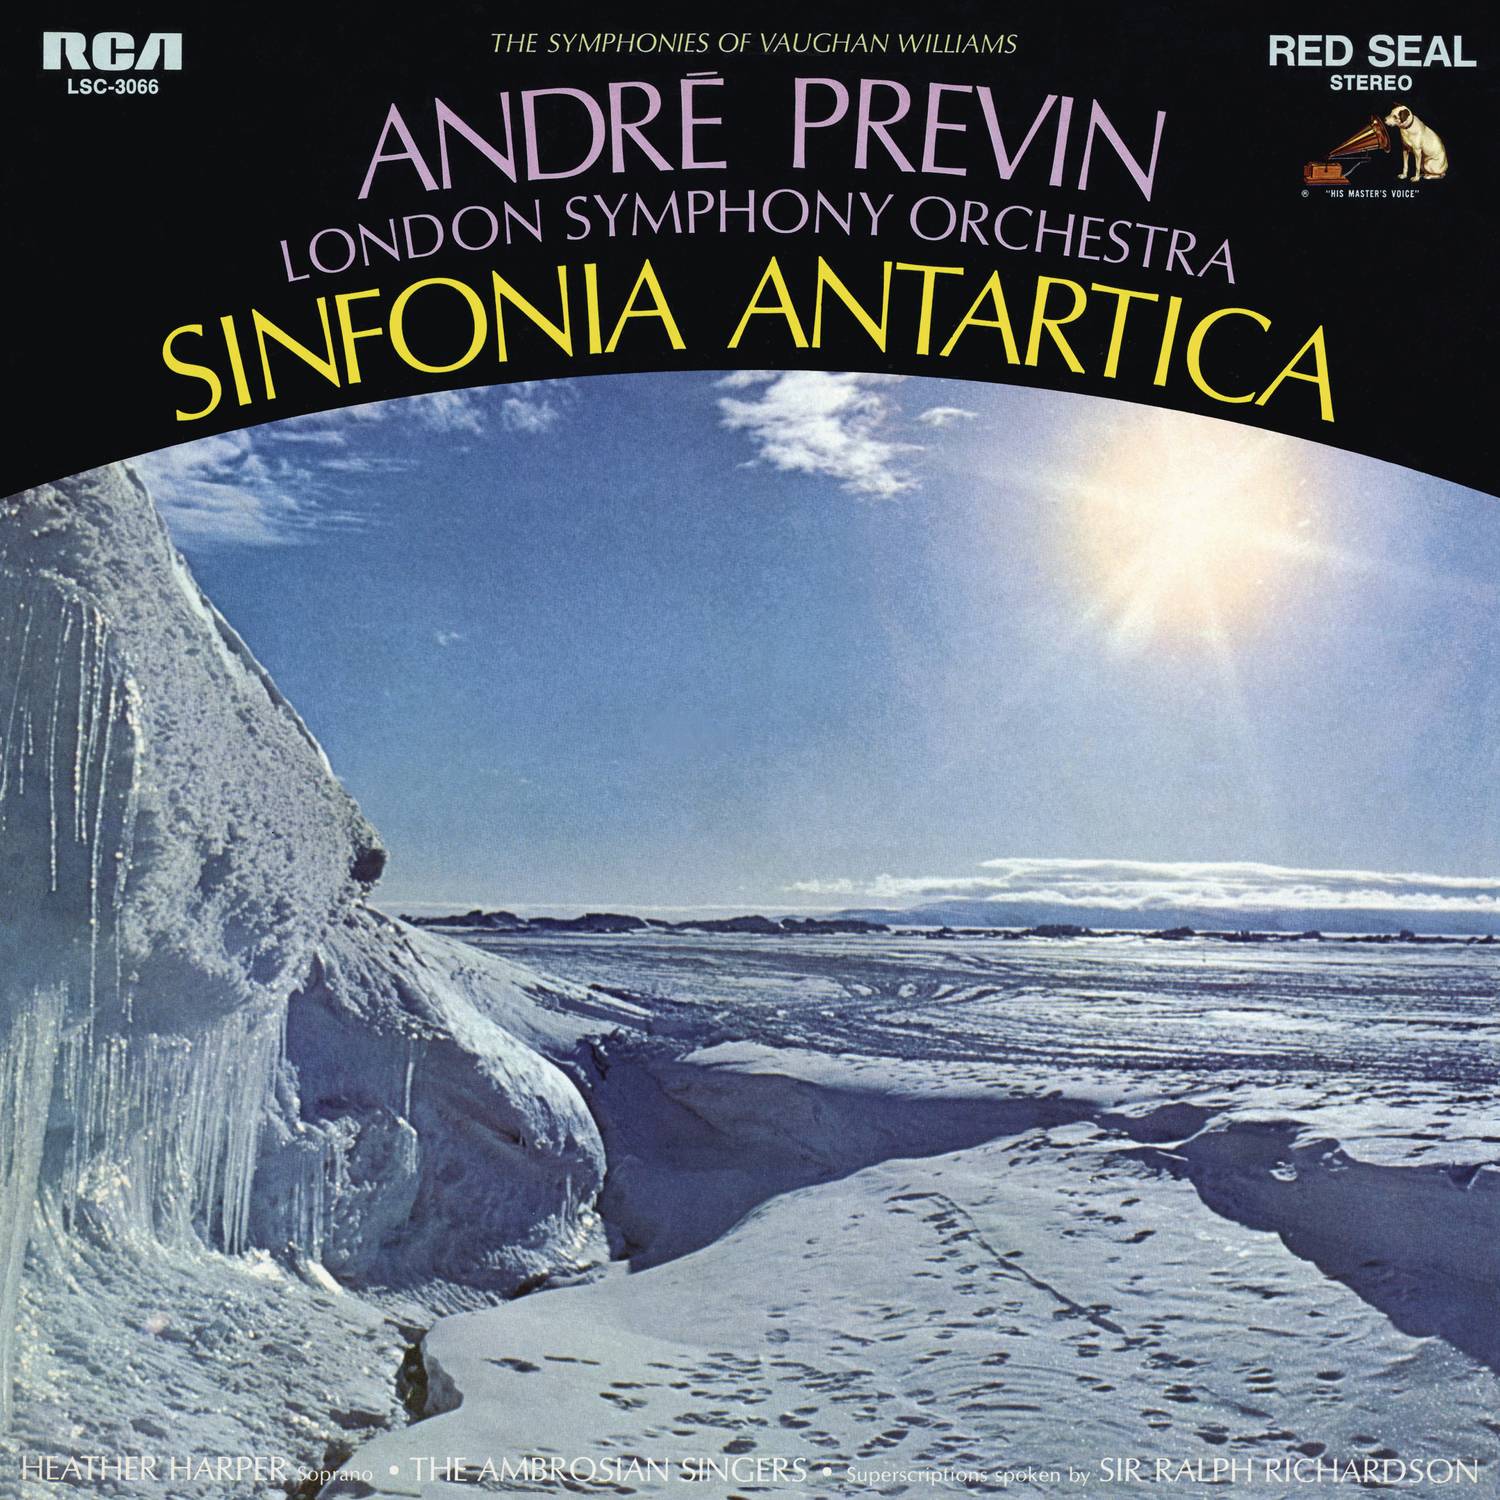 Sinfonia Antartica (Symphony No. 7):II. Scherzo - Moderato